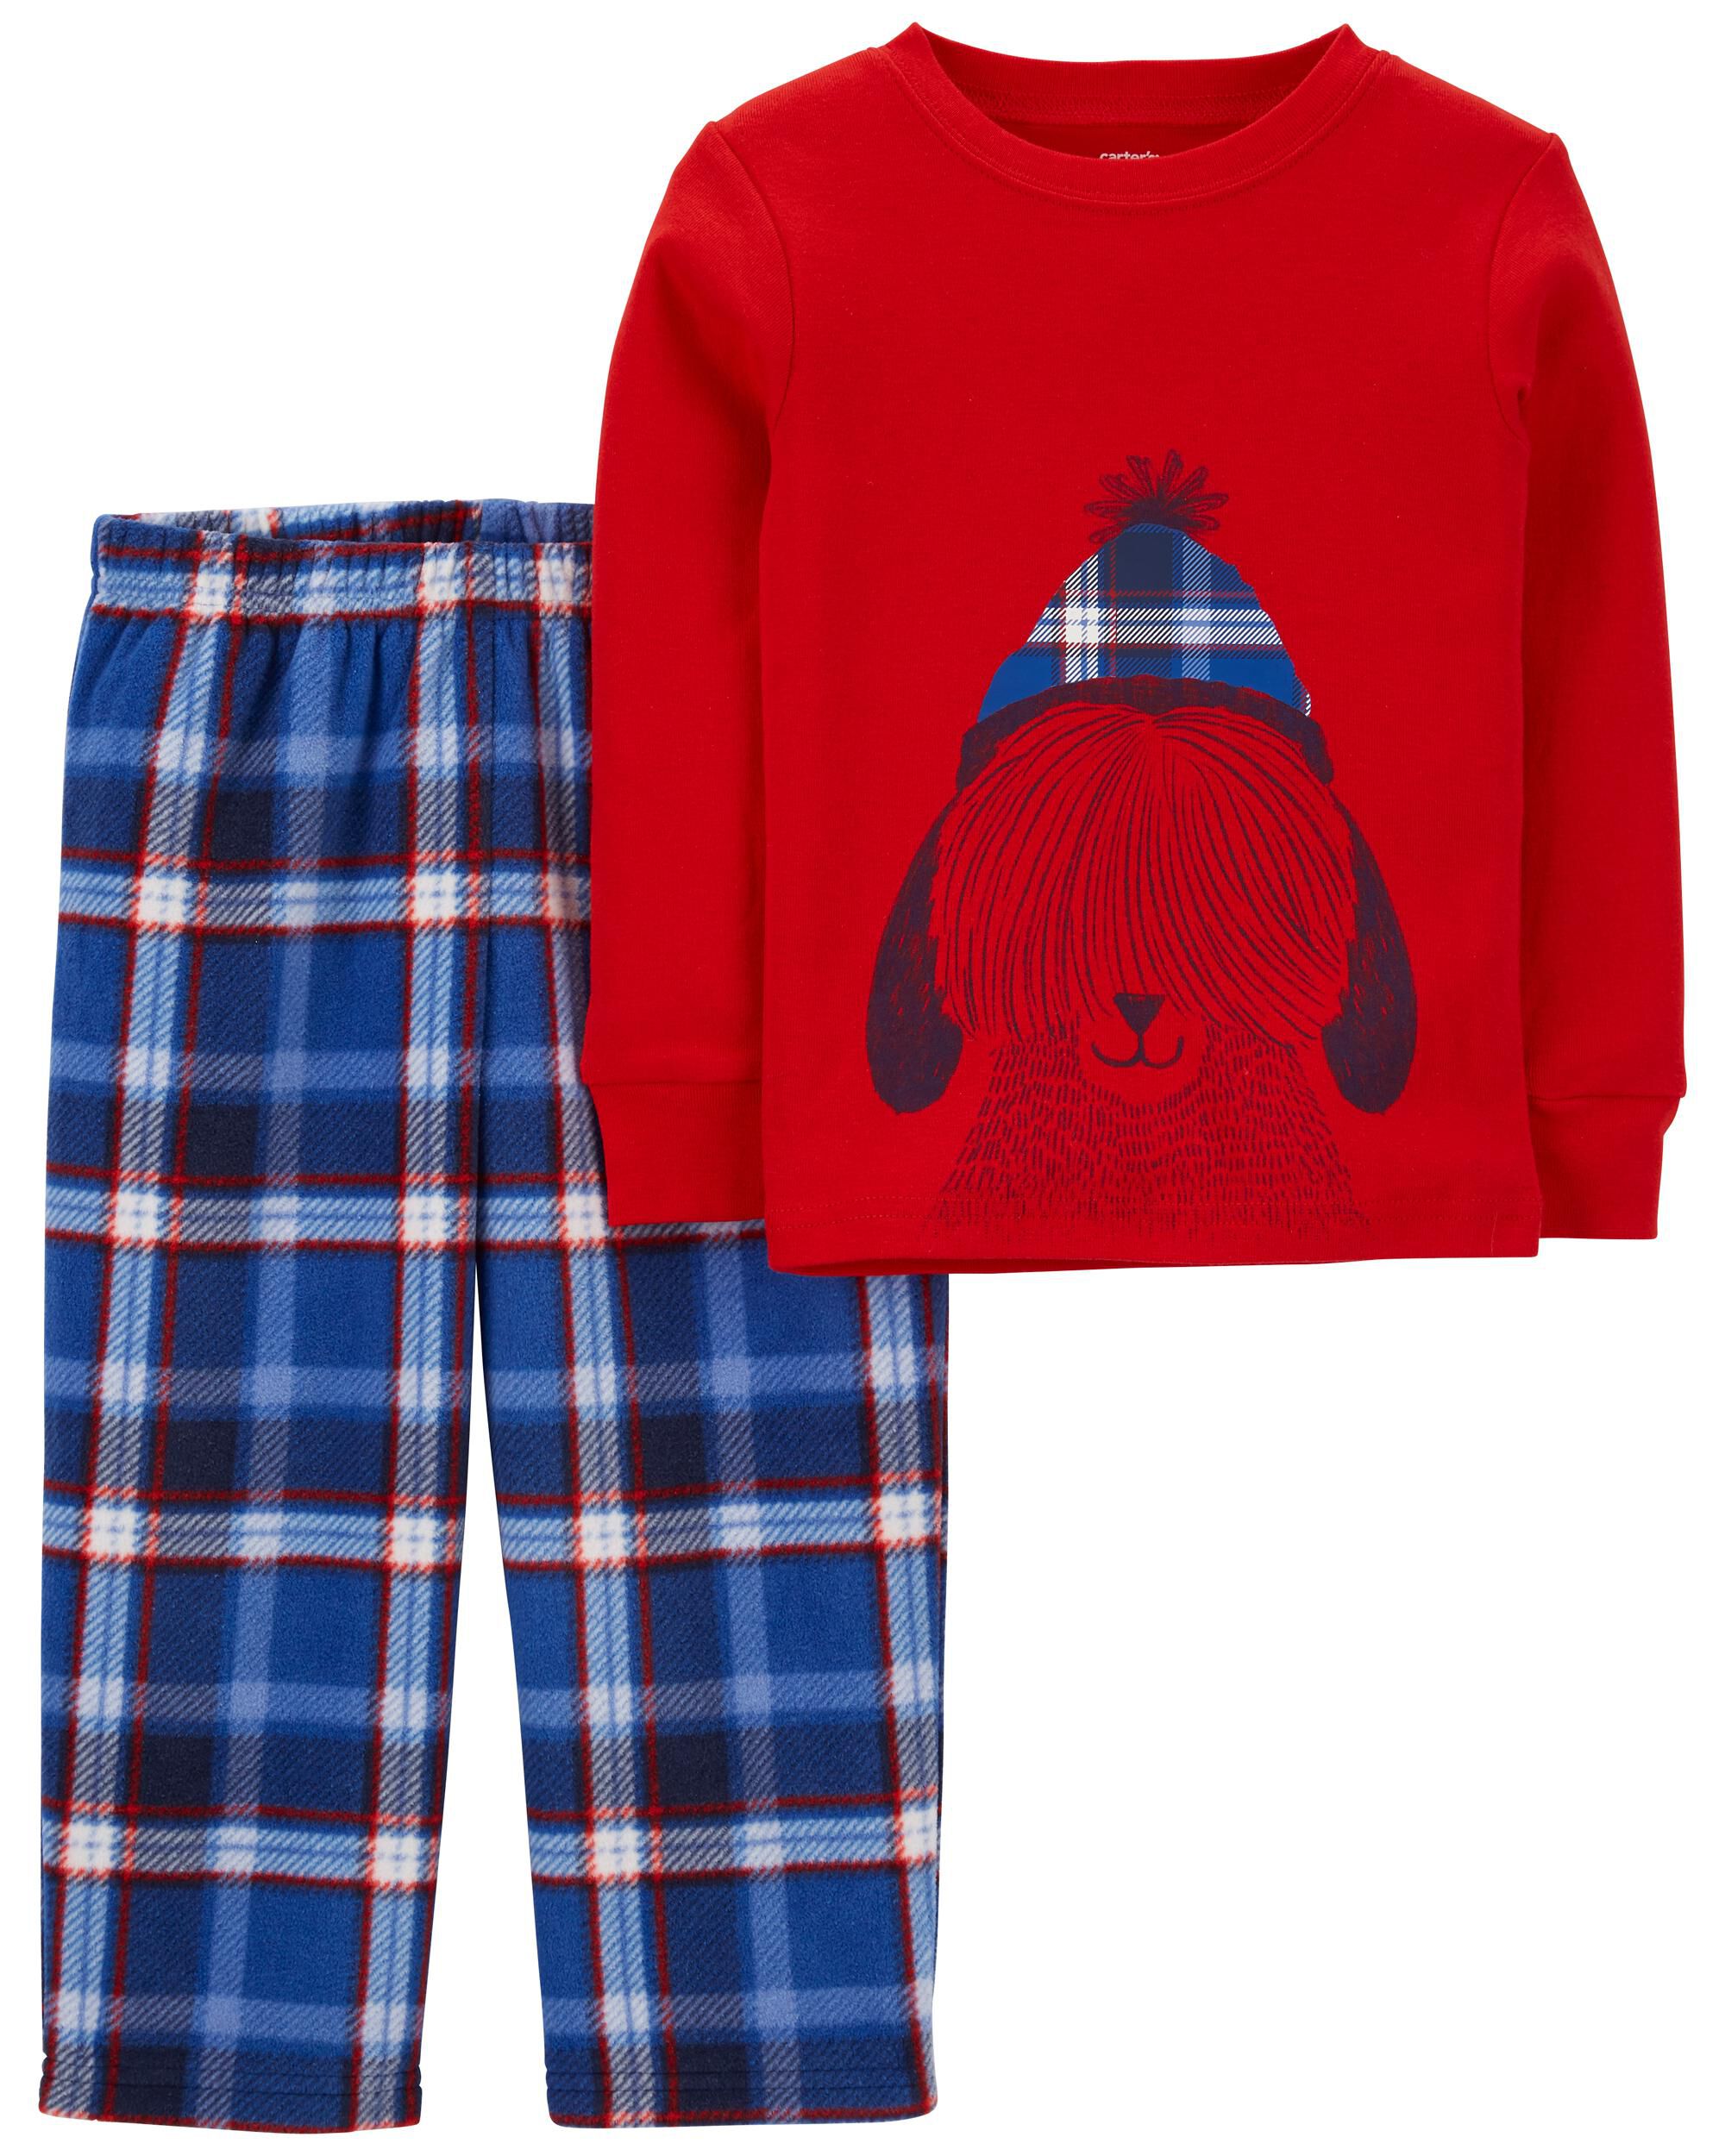 Nwada Toddler Boys 2-Piece Snug-Fit Cotton Christmas Pajama Set 